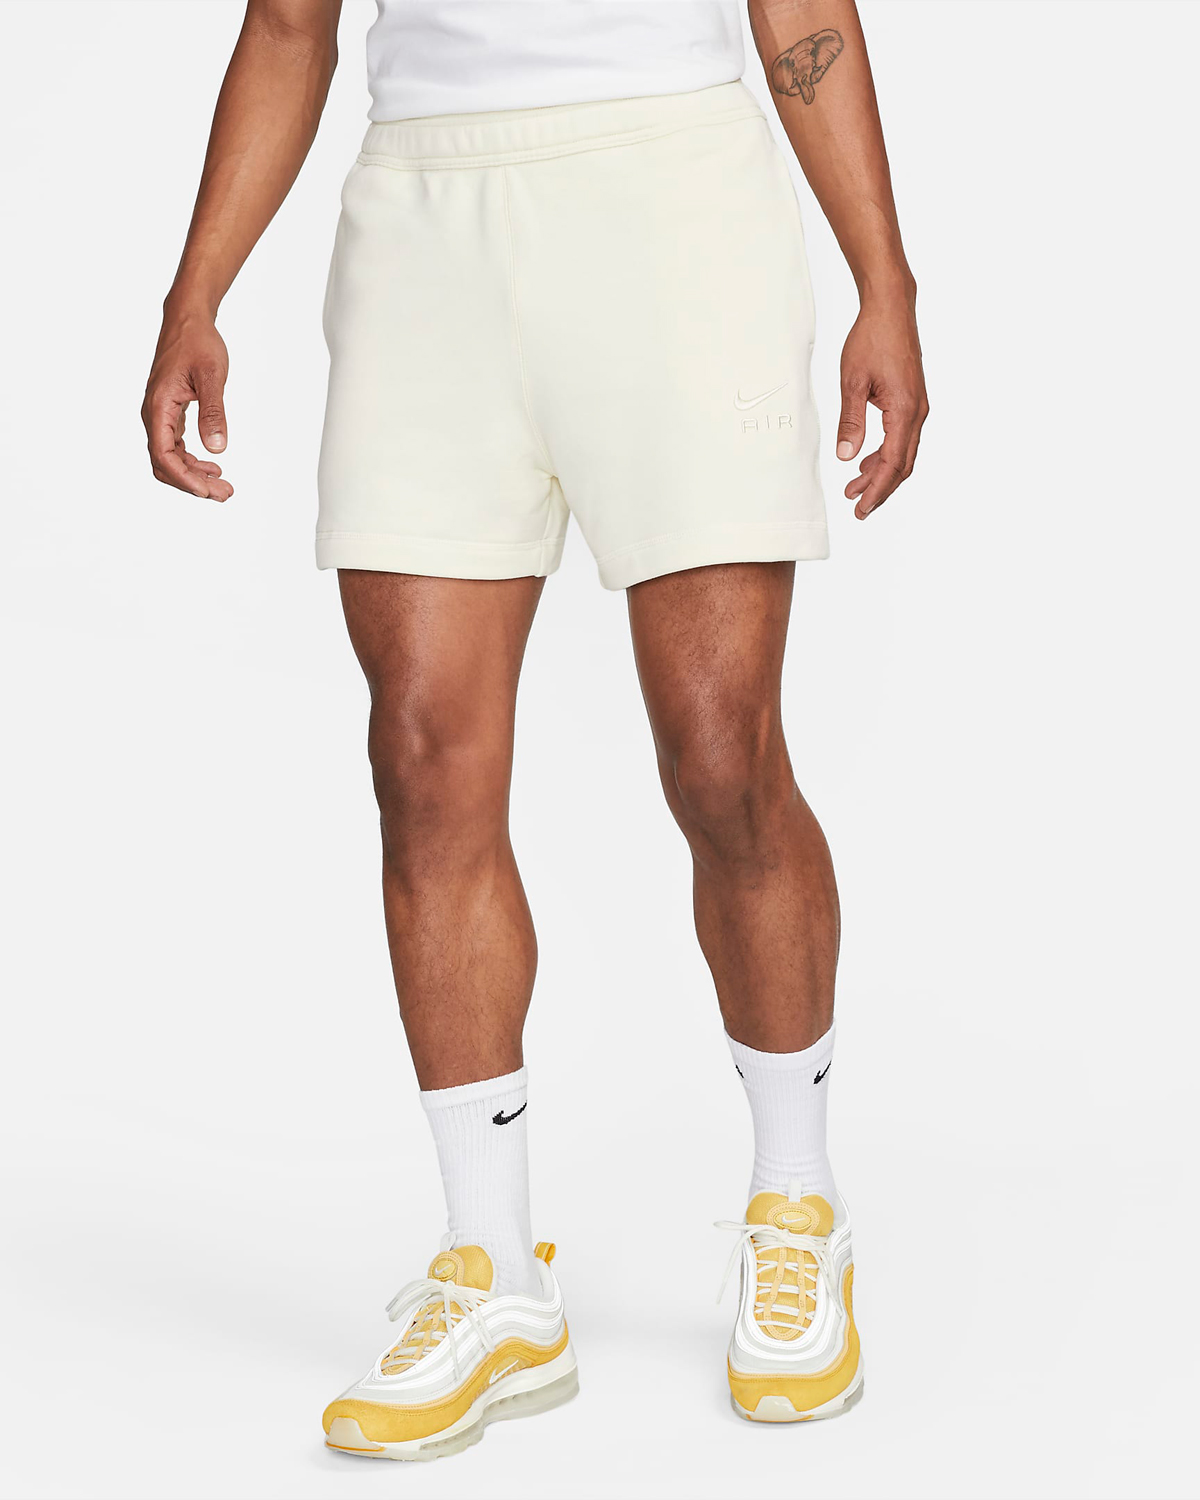 Nike-Sportswear-Air-French-Terry-Shorts-Coconut-Milk-1